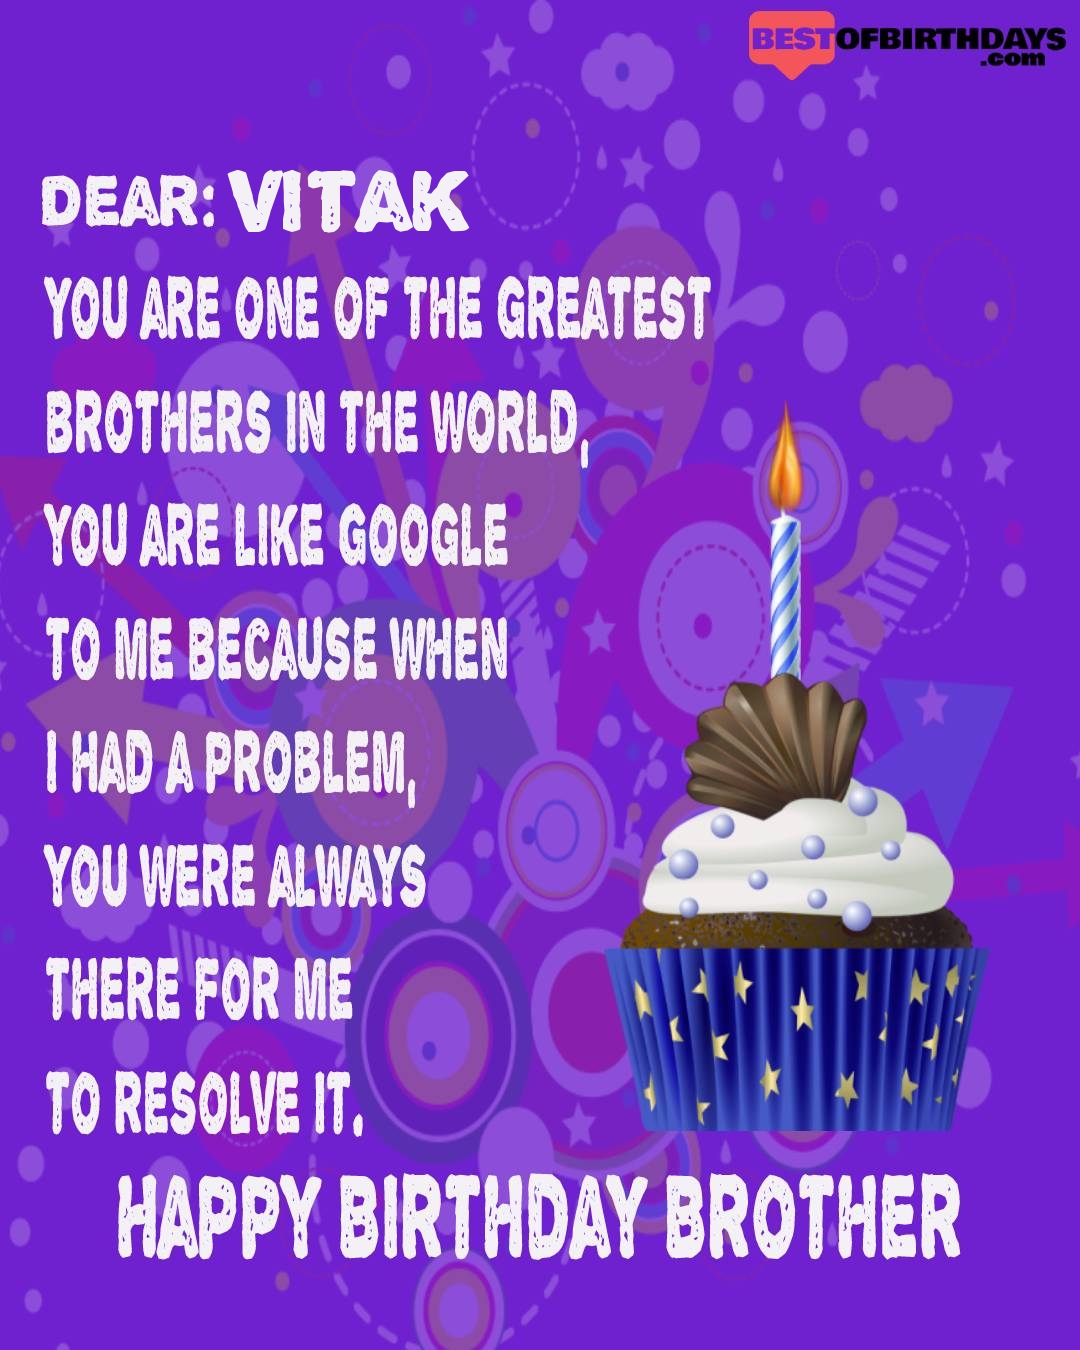 Happy birthday vitak bhai brother bro